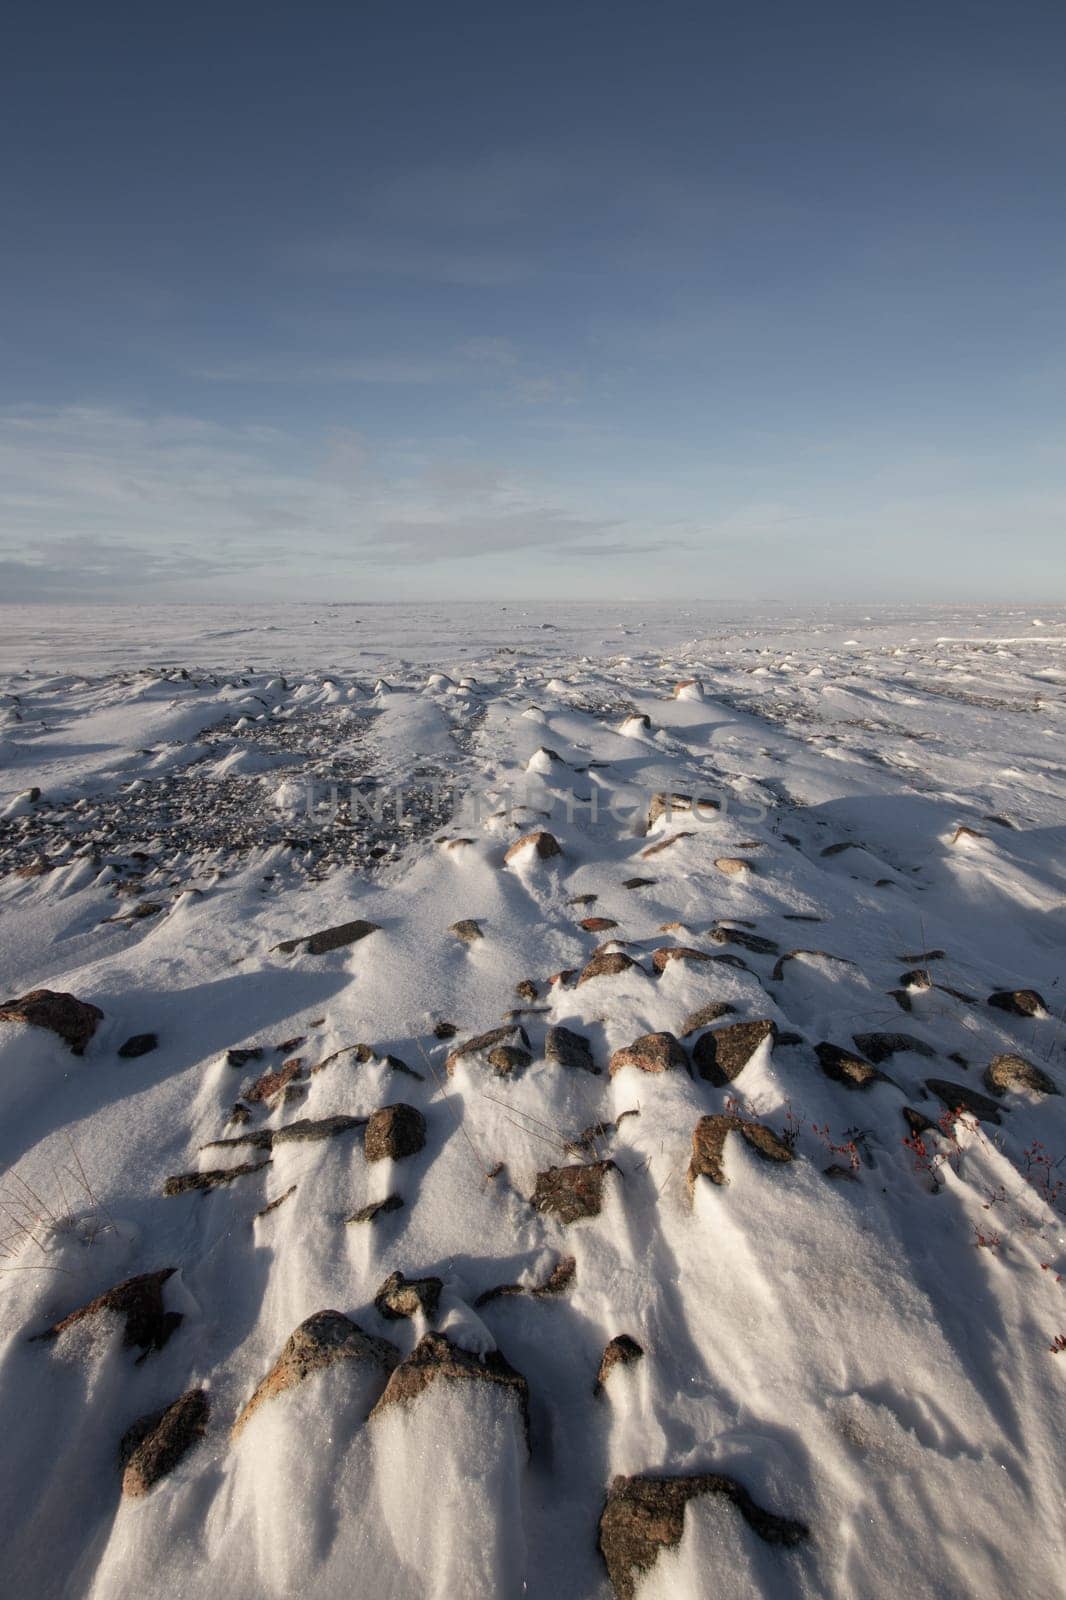 Frozen arctic landscape with snow on the ground near Arviat, Nunavut by Granchinho